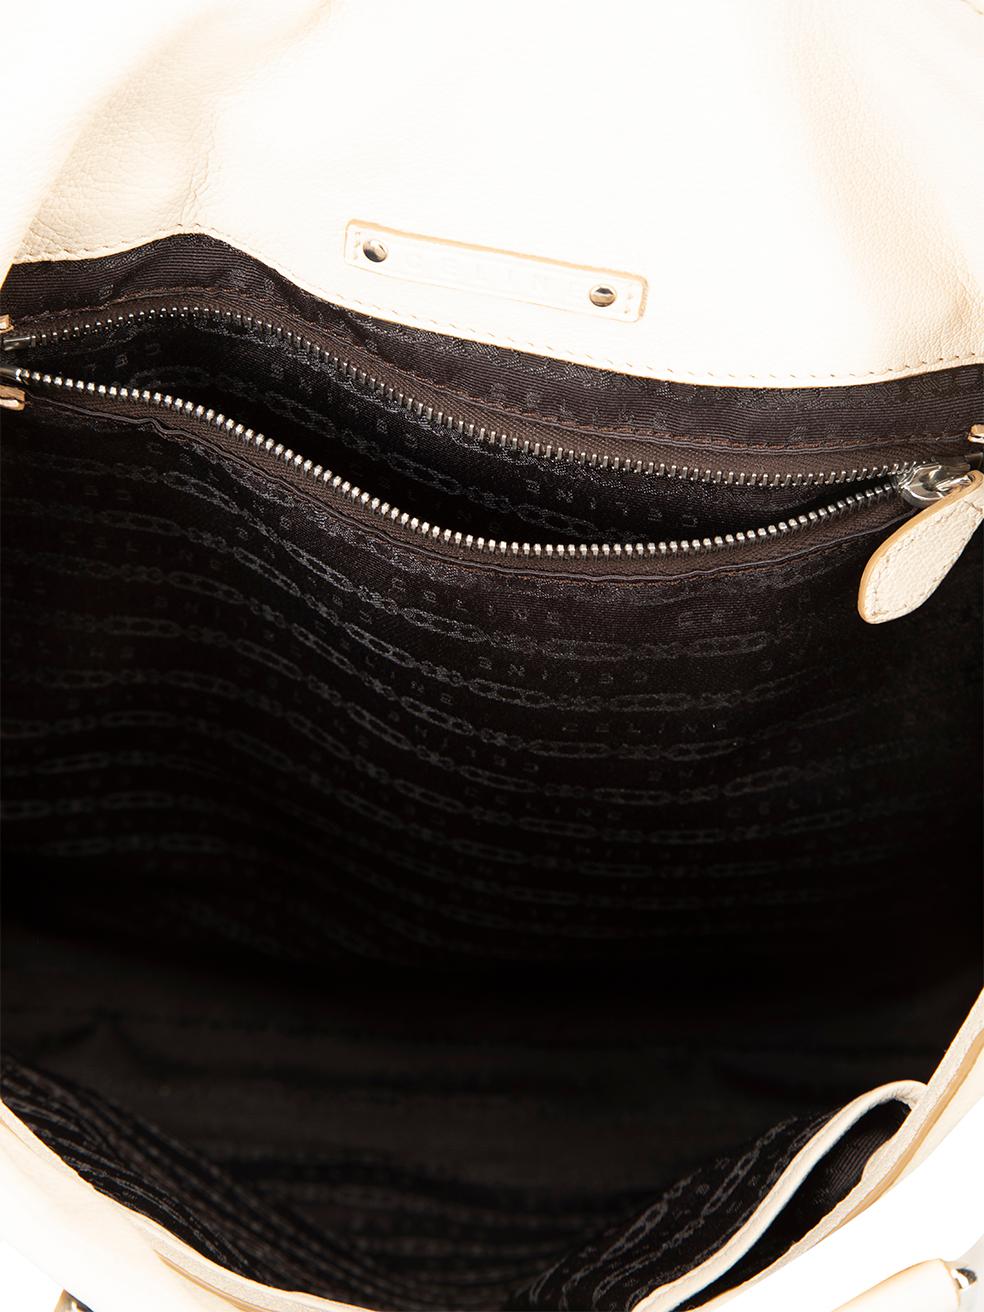 Céline Women's Cream Leather Large Tote Bag 2